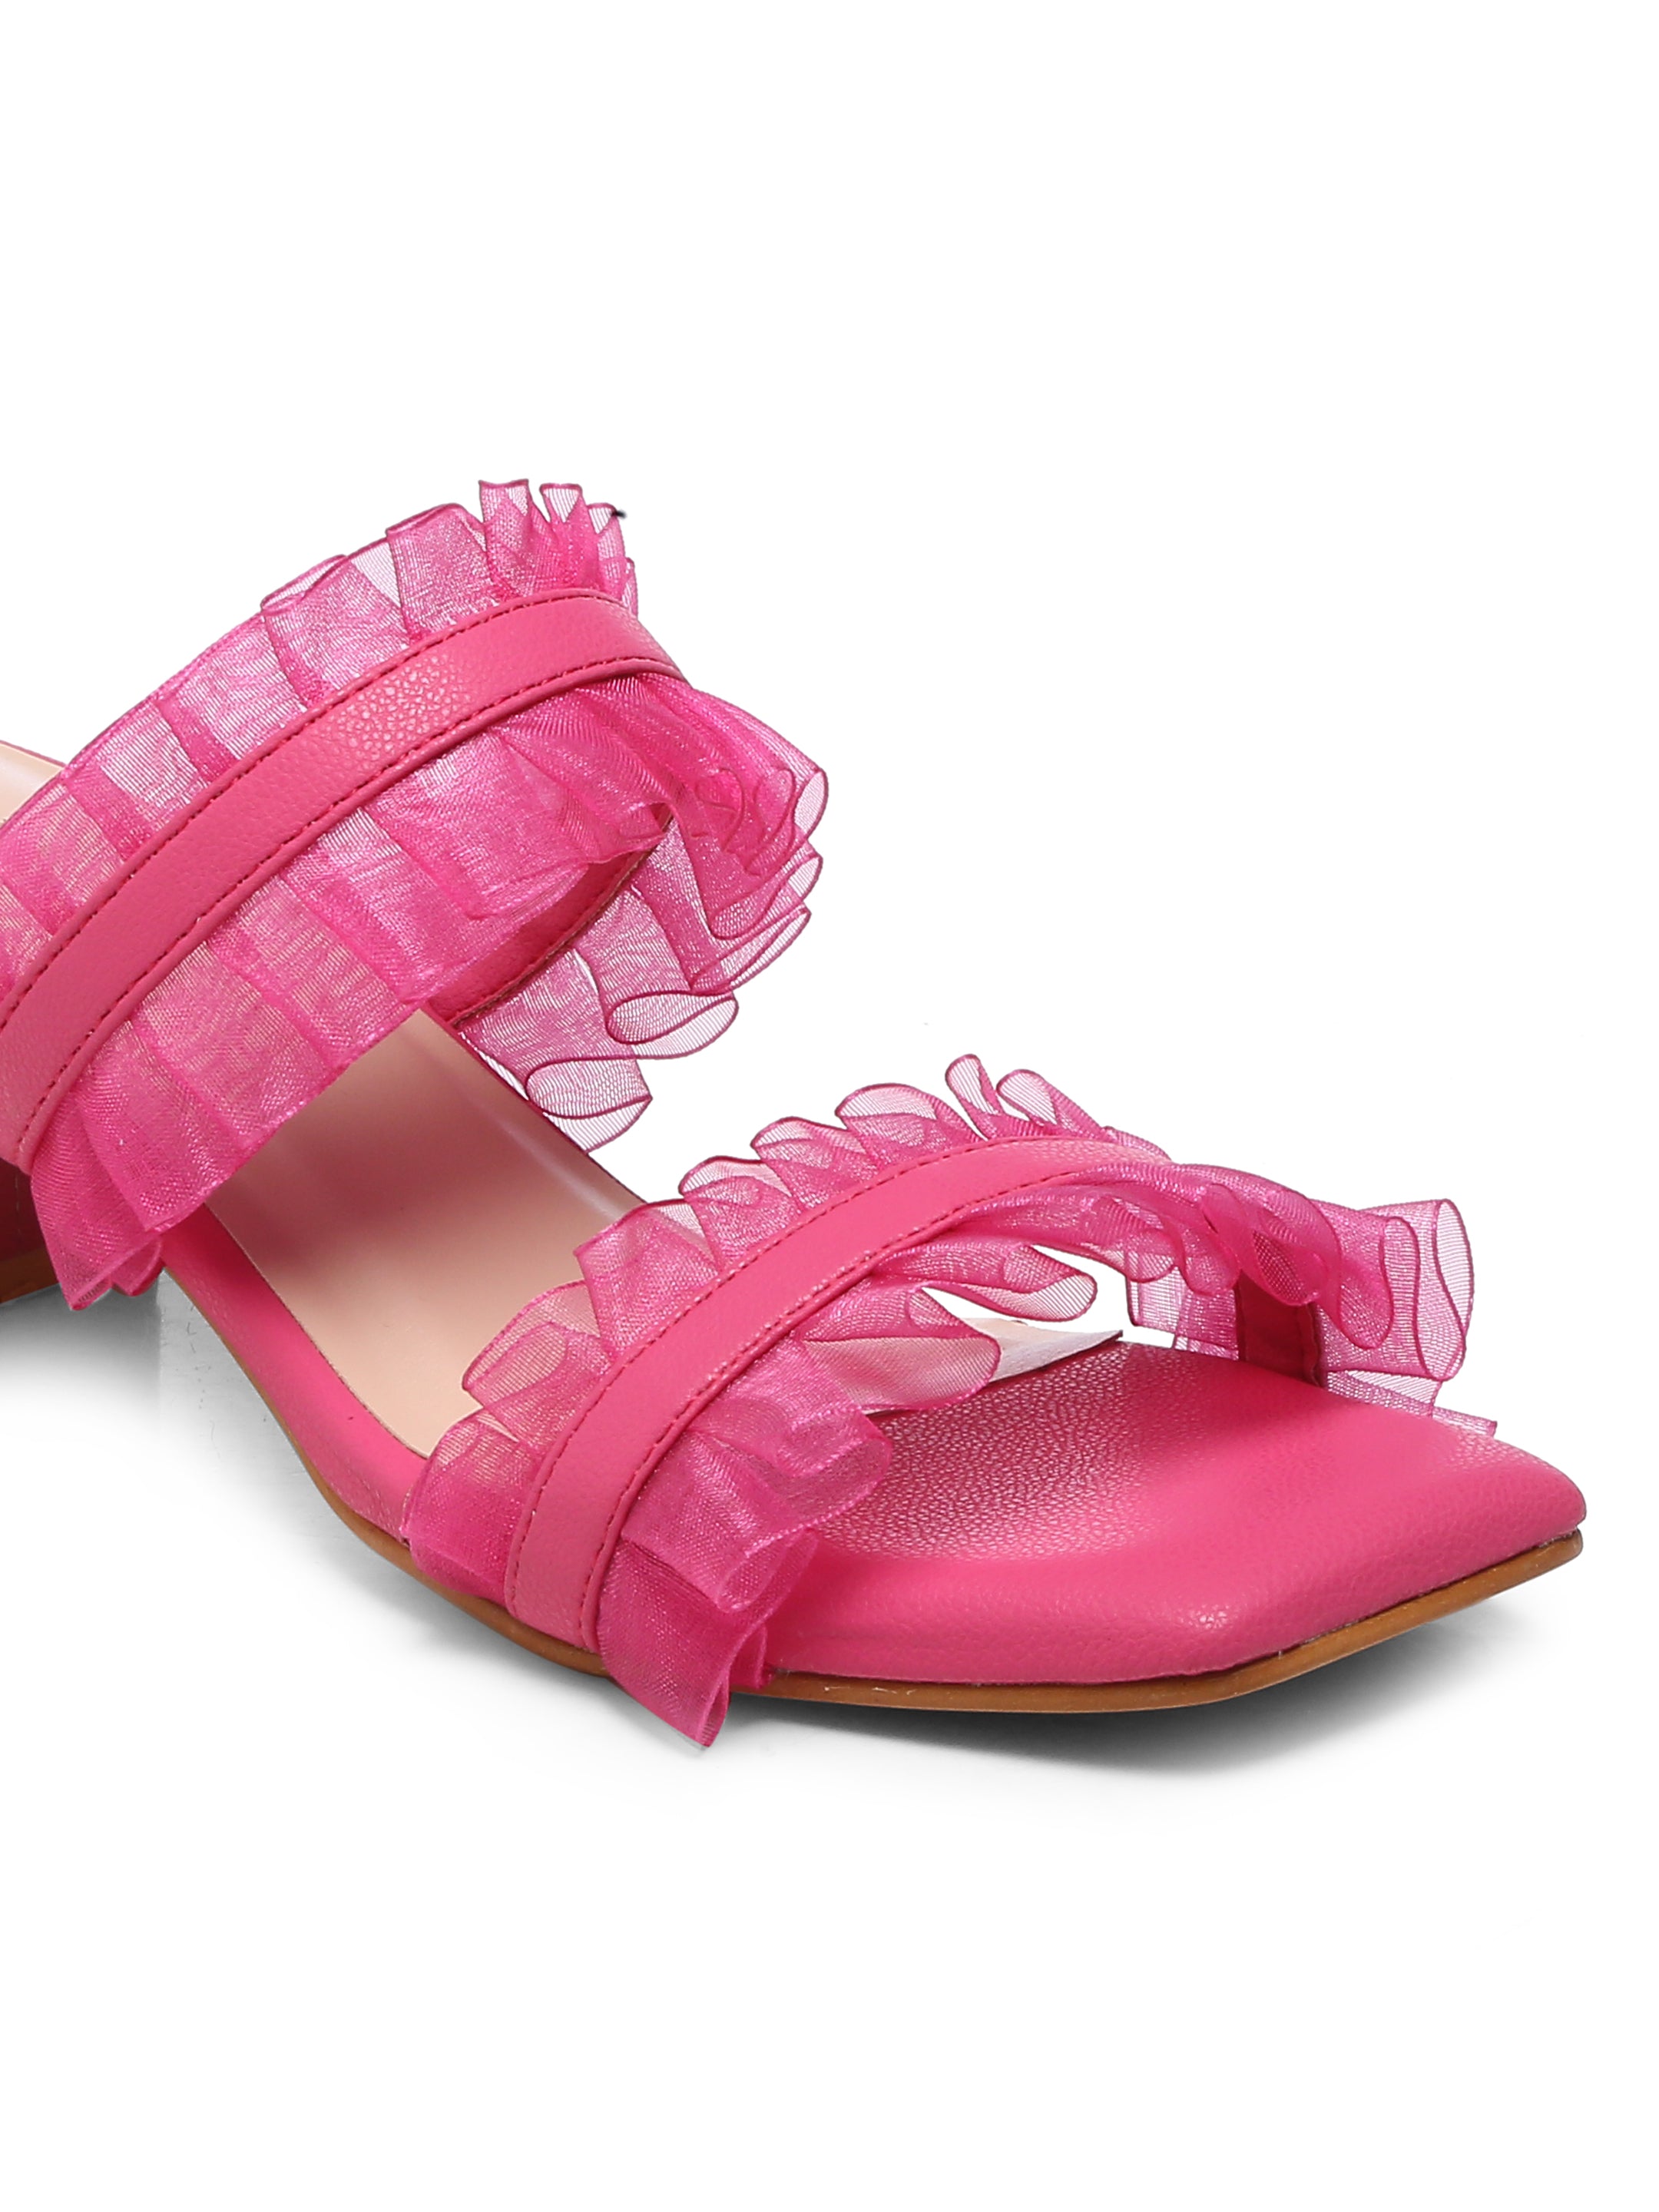 GNIST Hot pink Double Strap Ruffle Block Heels